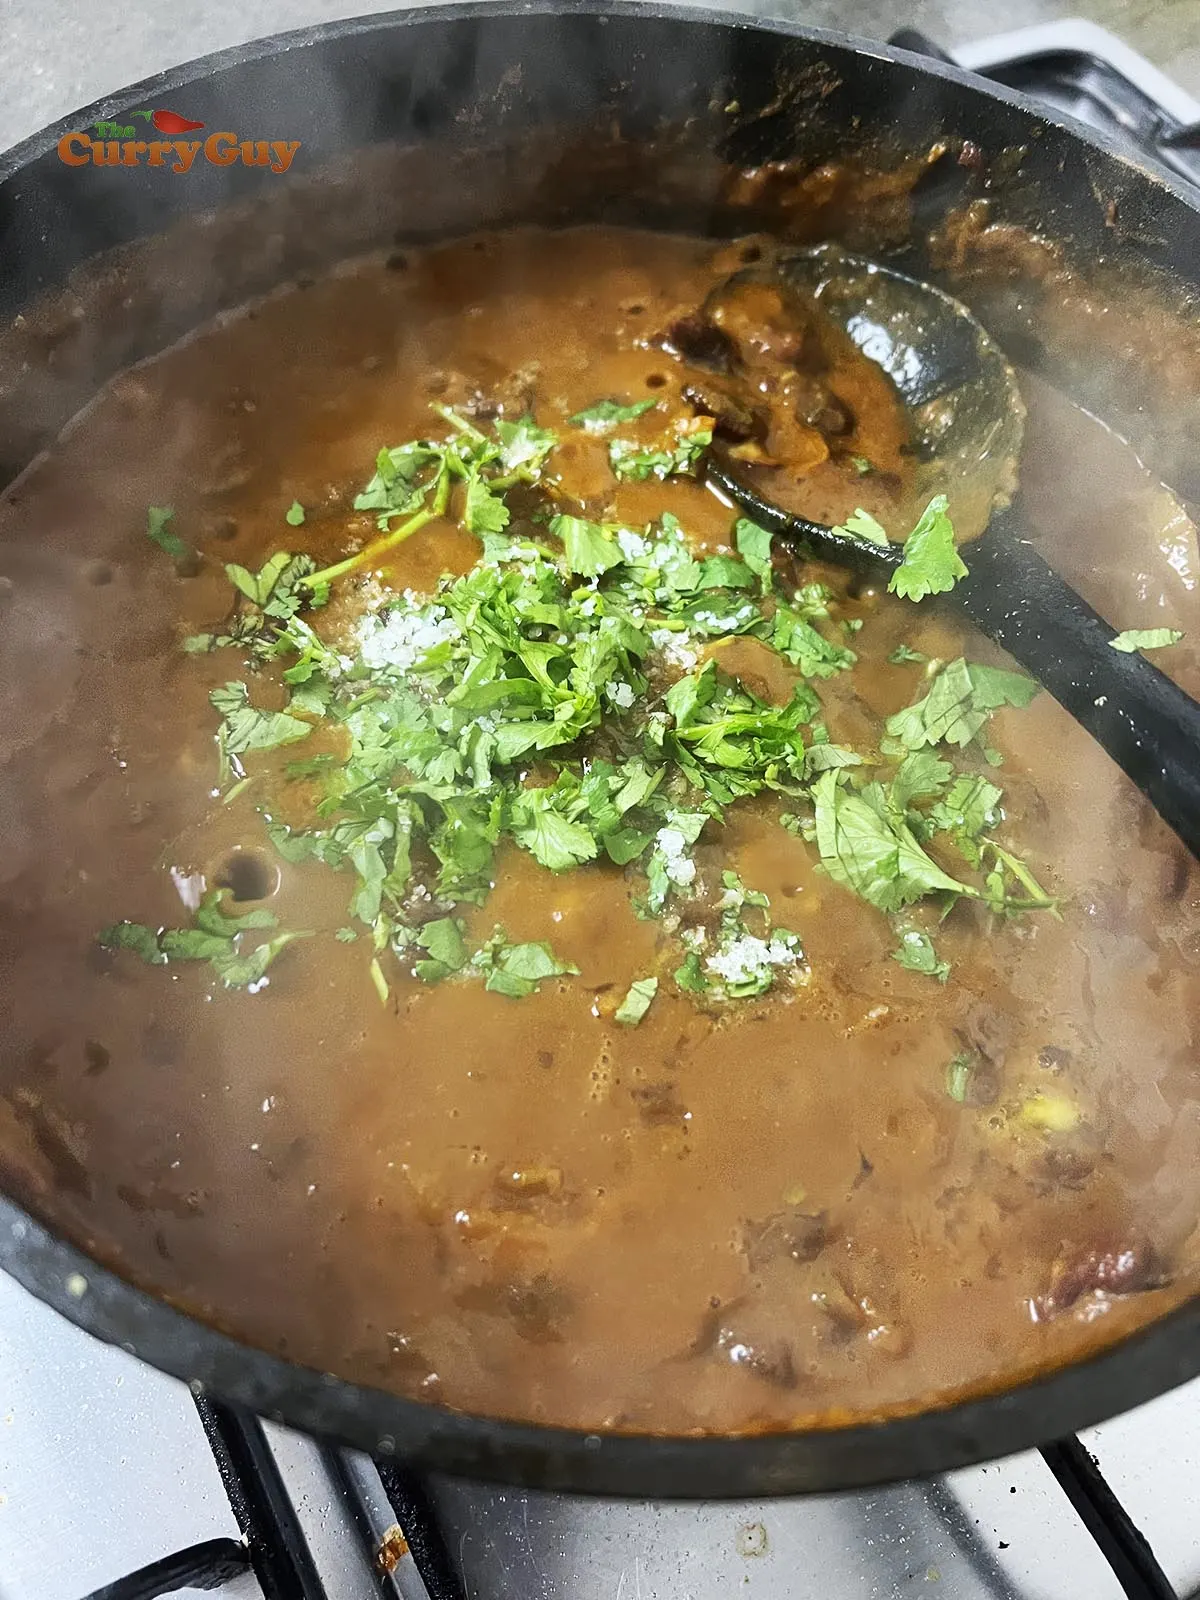 Adding salt and coriander (cilantro) to the sauce